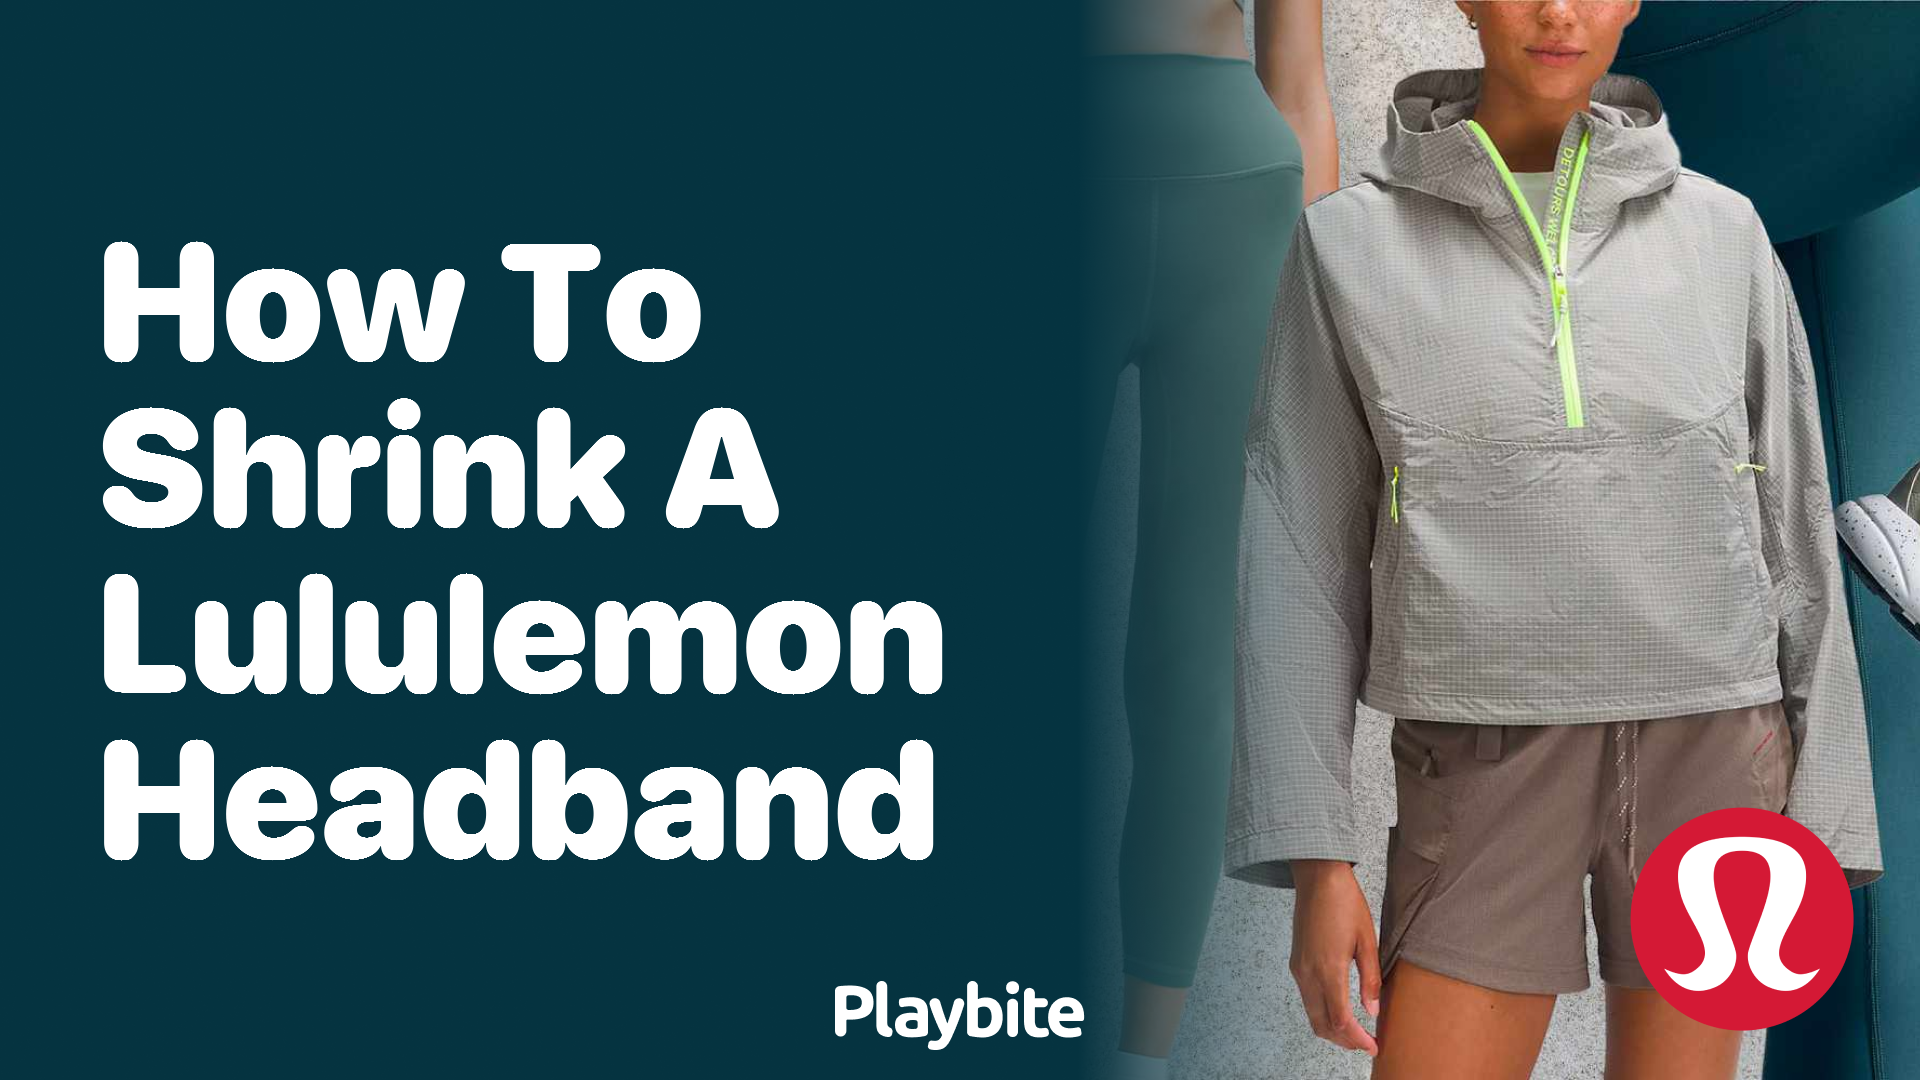 How to Shrink a Lululemon Headband: A Simple Guide